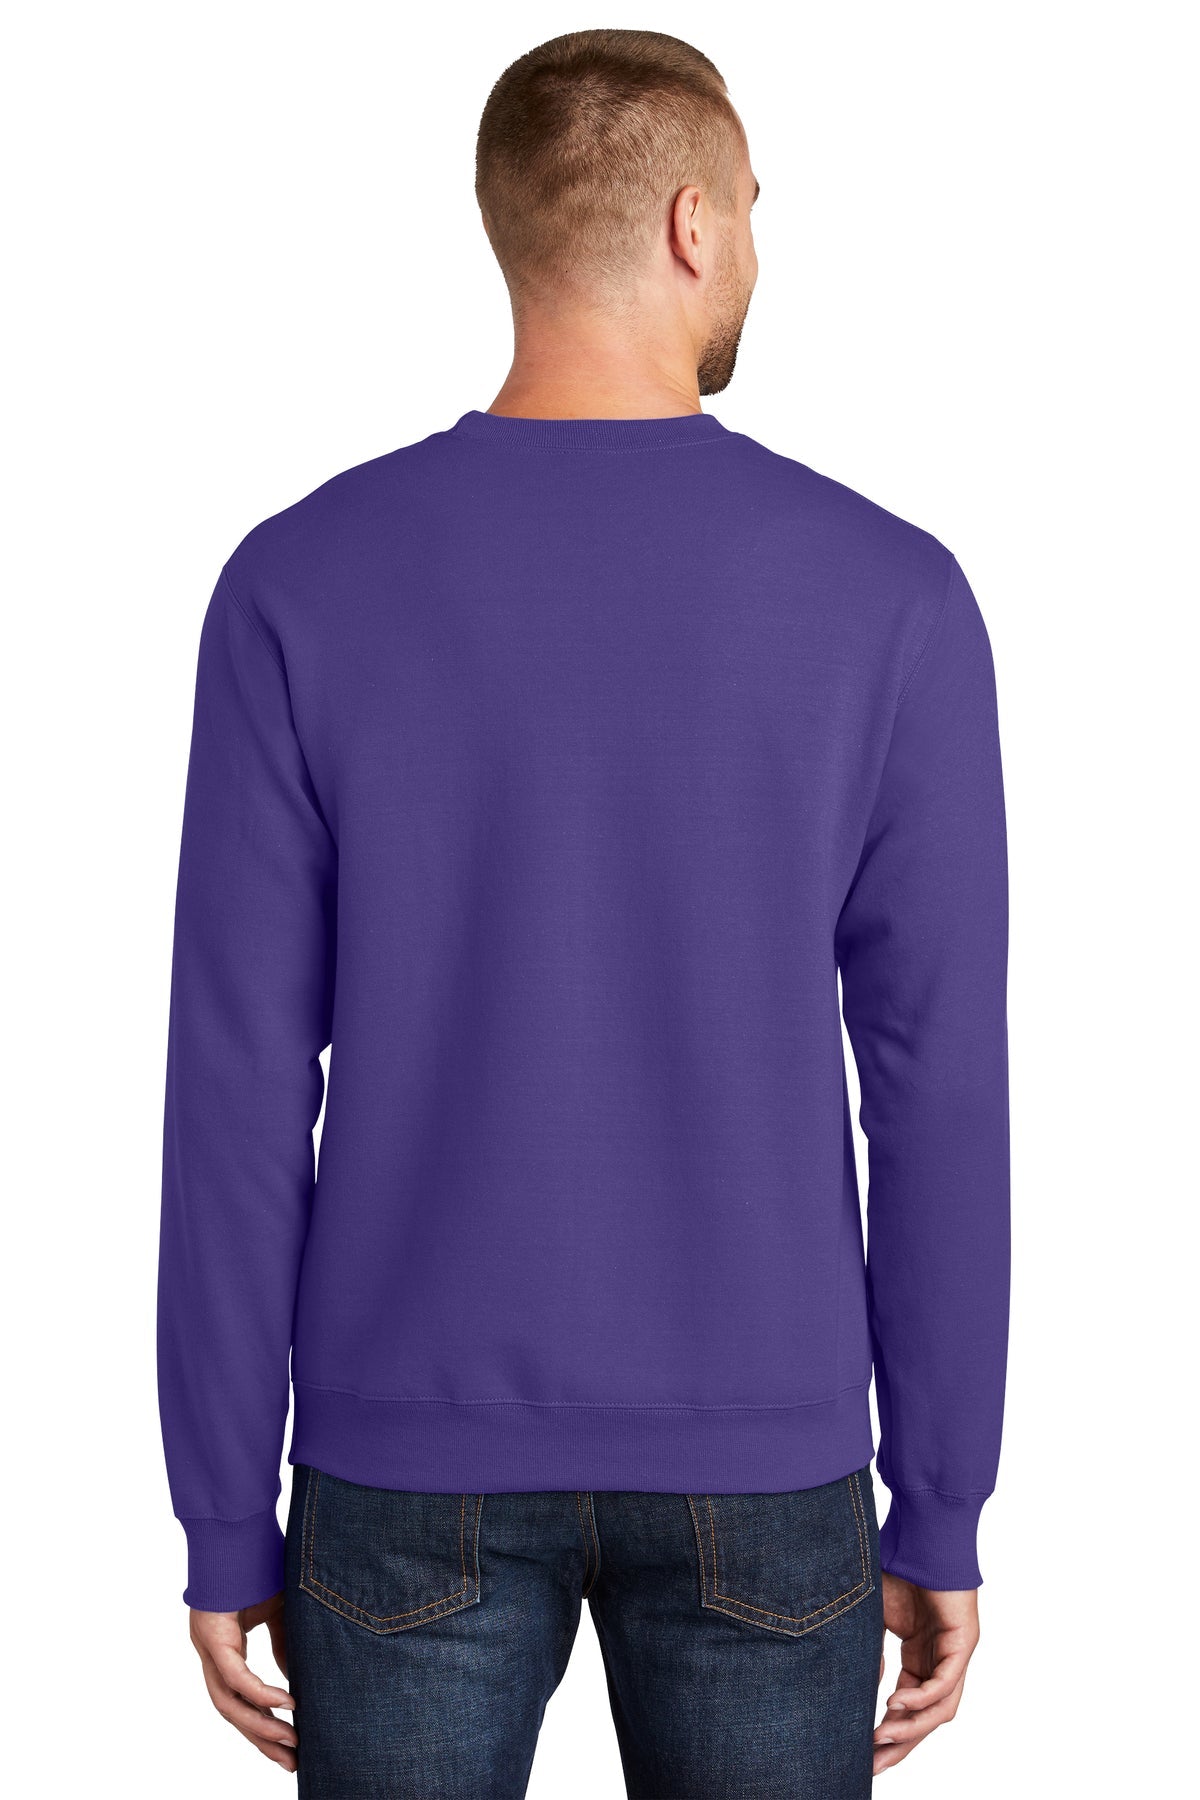 port & company_pc90 _purple_company_logo_sweatshirts